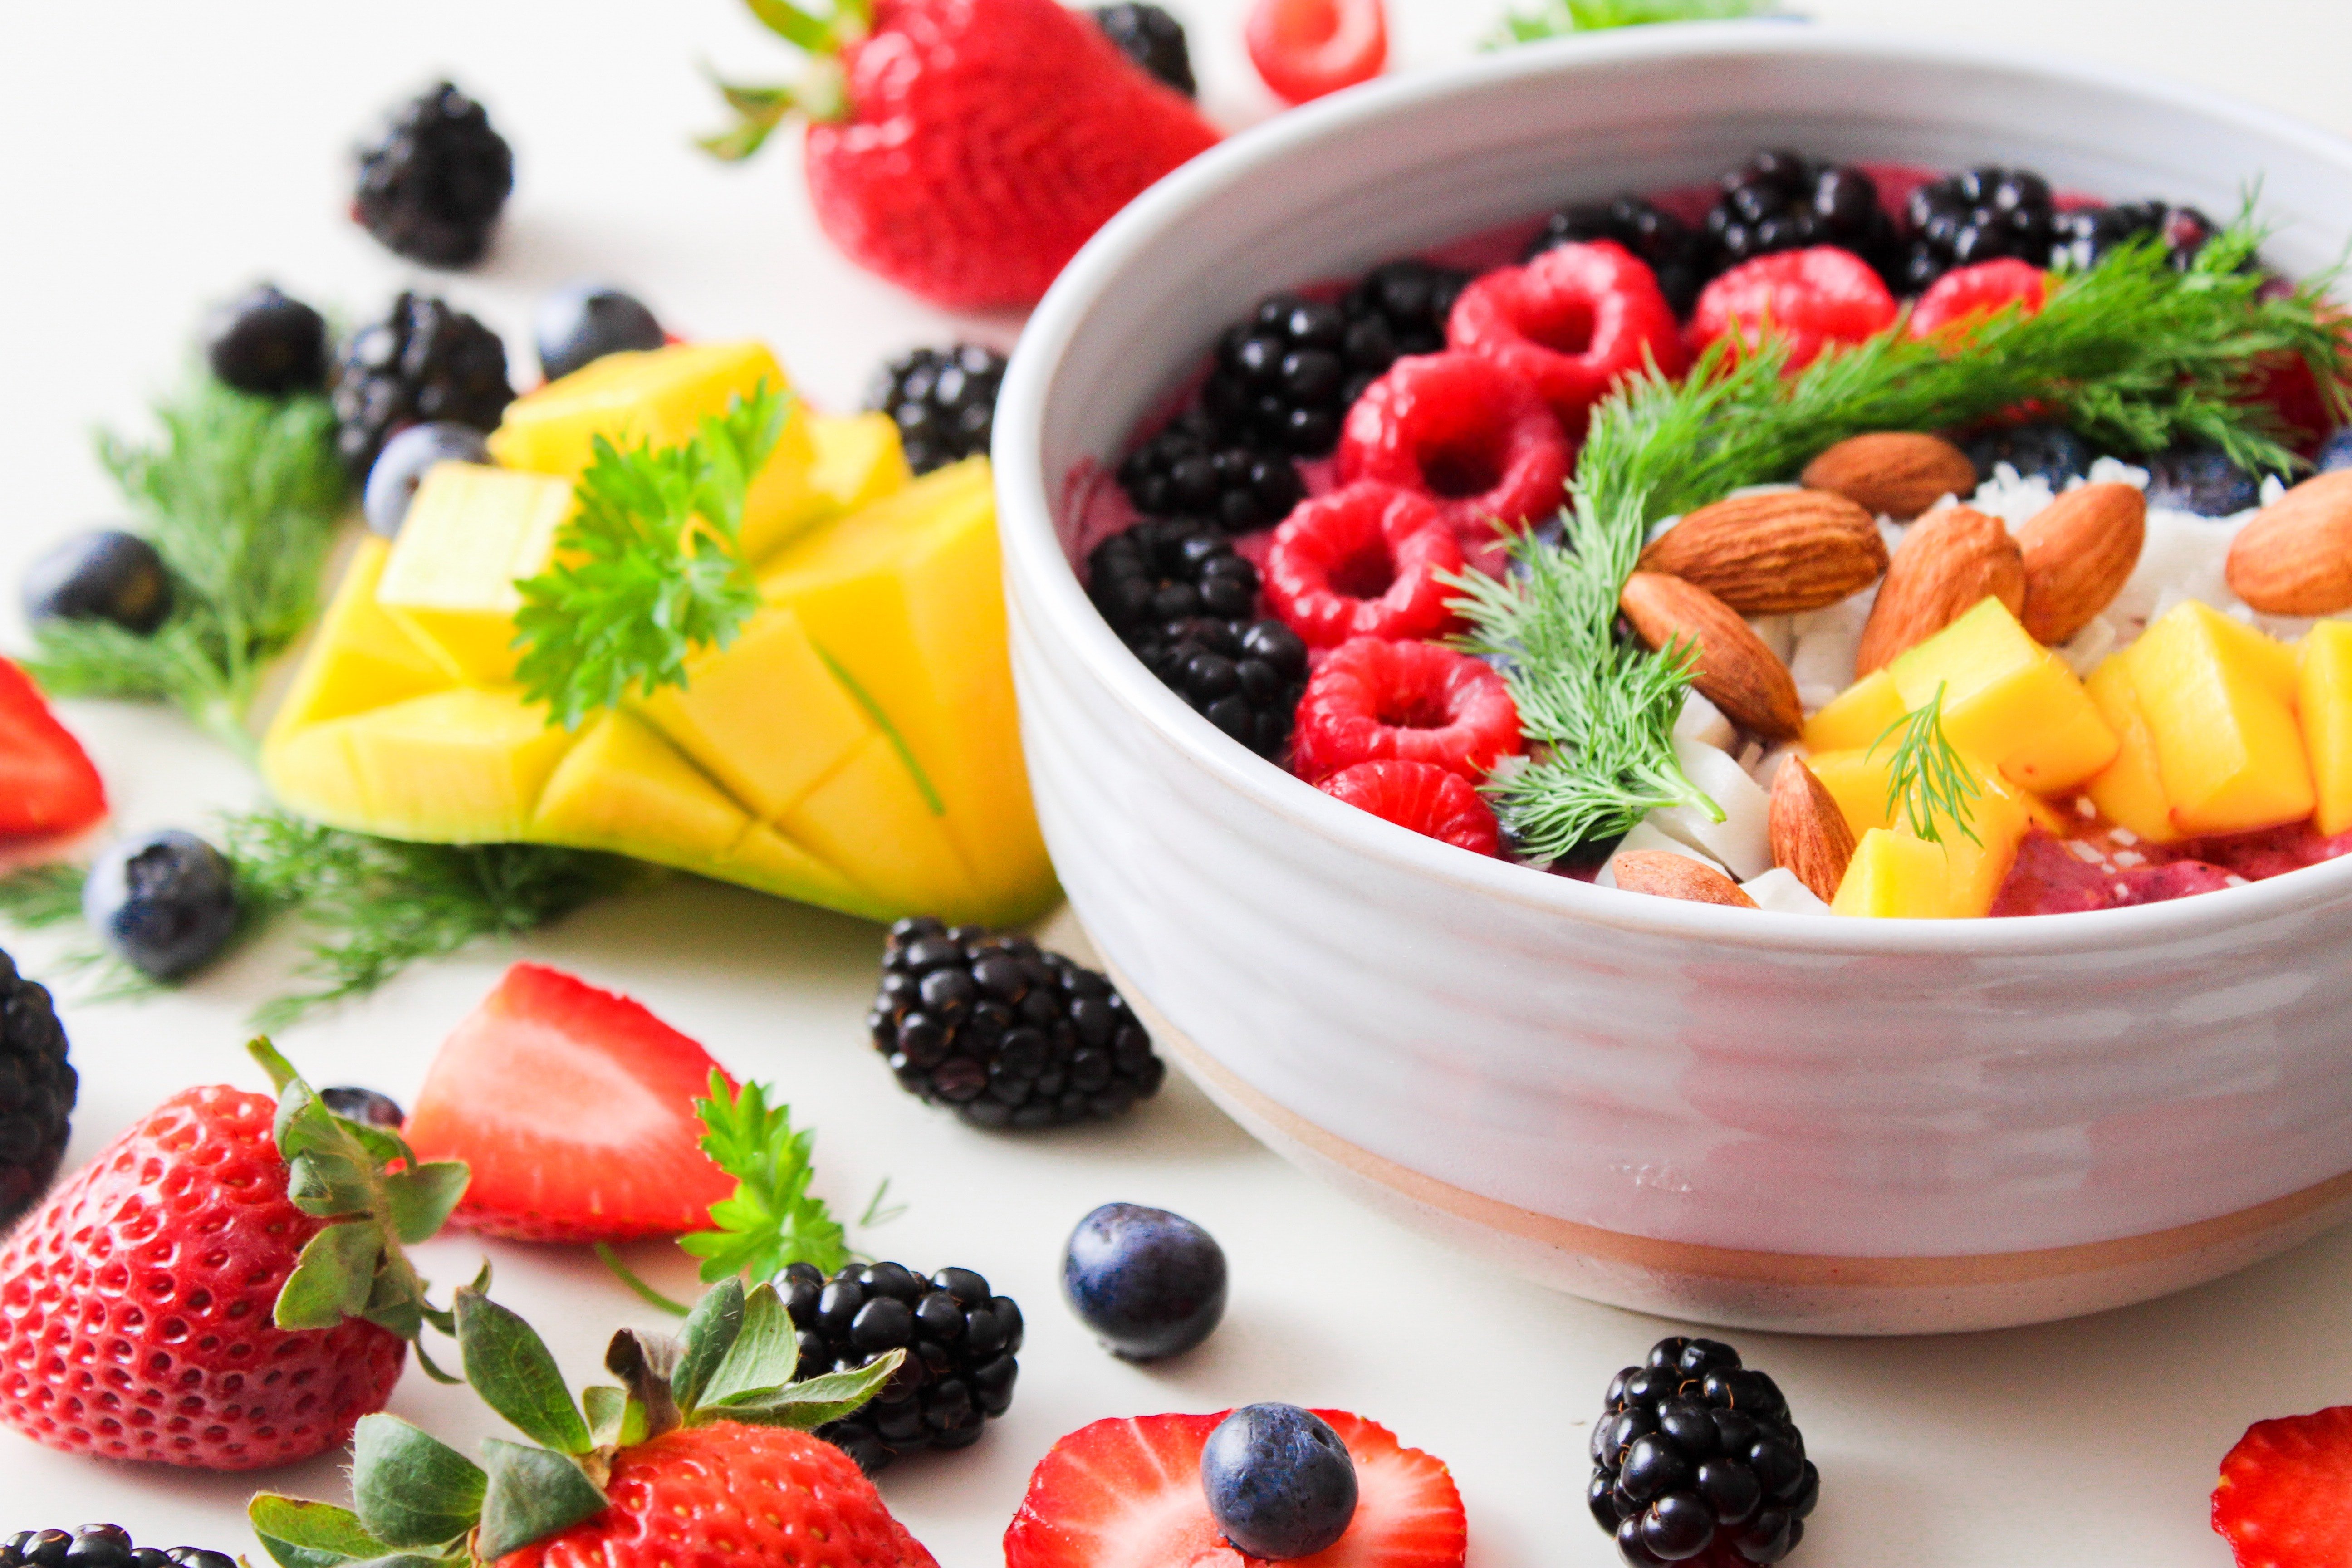 A bowl of fruit salad | Source: Pexels